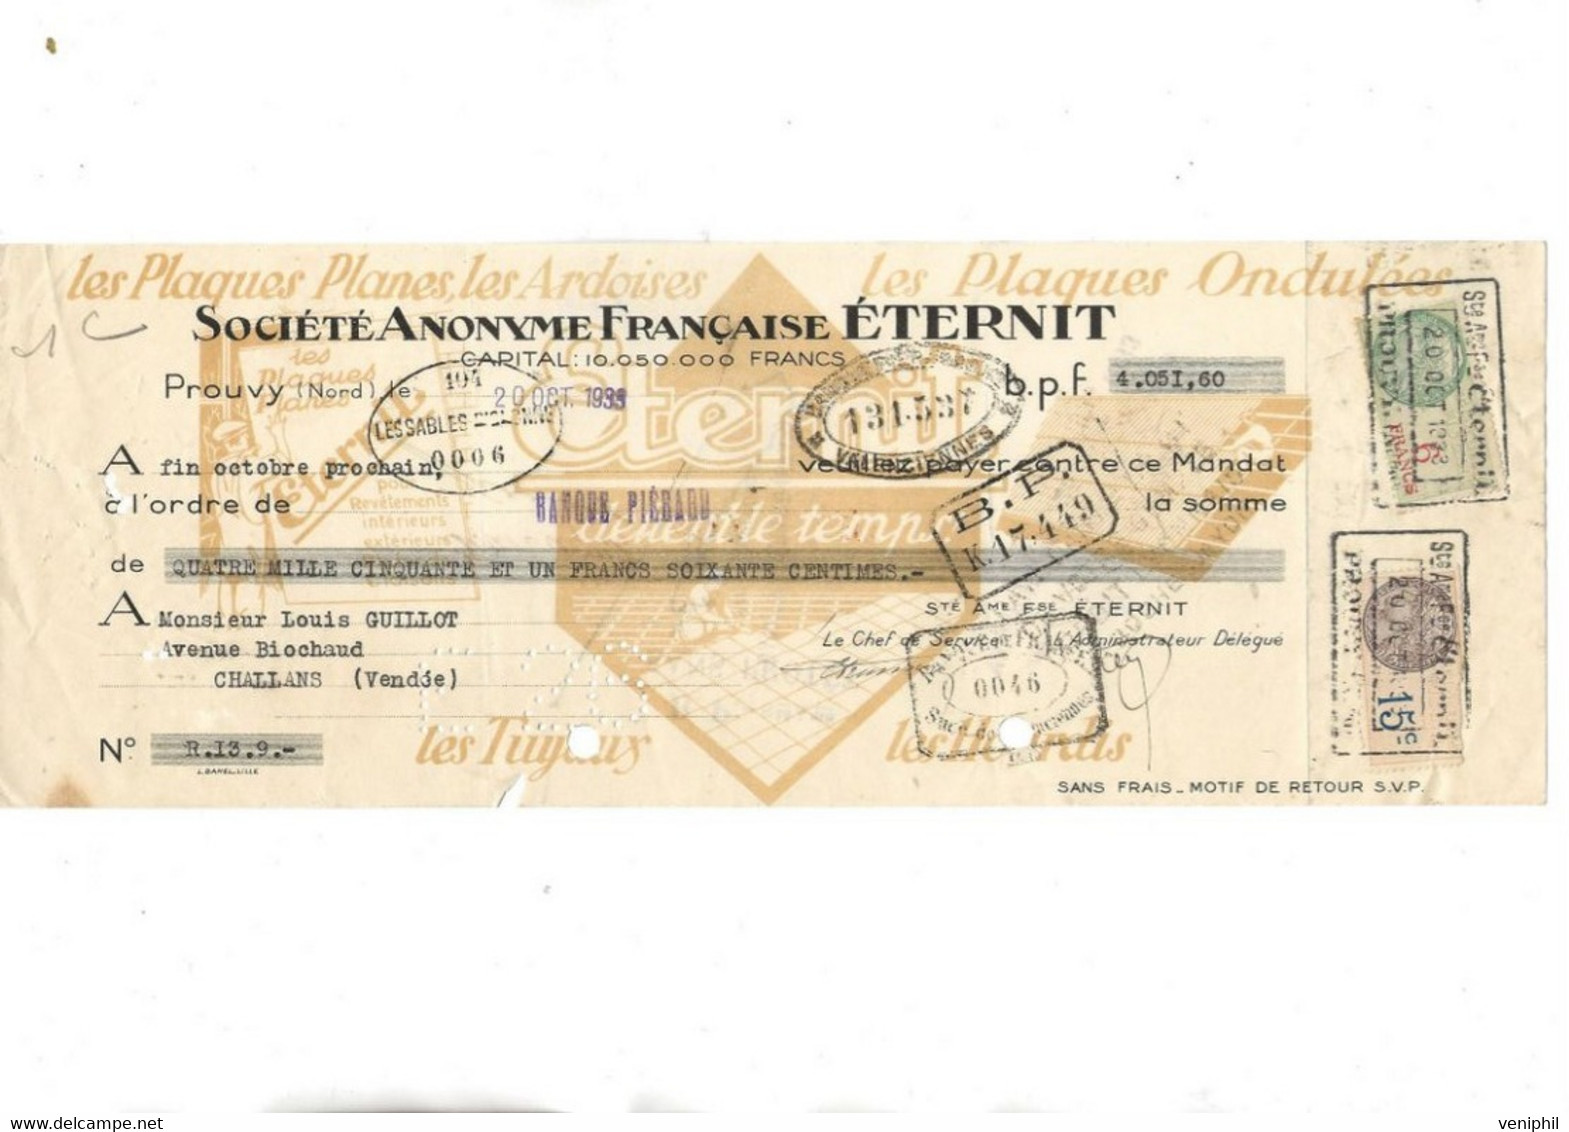 3 LETTRES DE CHANGES TIMBREES - SOCIETE FRANCAISE ETERNIT-PROUVY -NORD - ANNEE 1923-24 - Bills Of Exchange